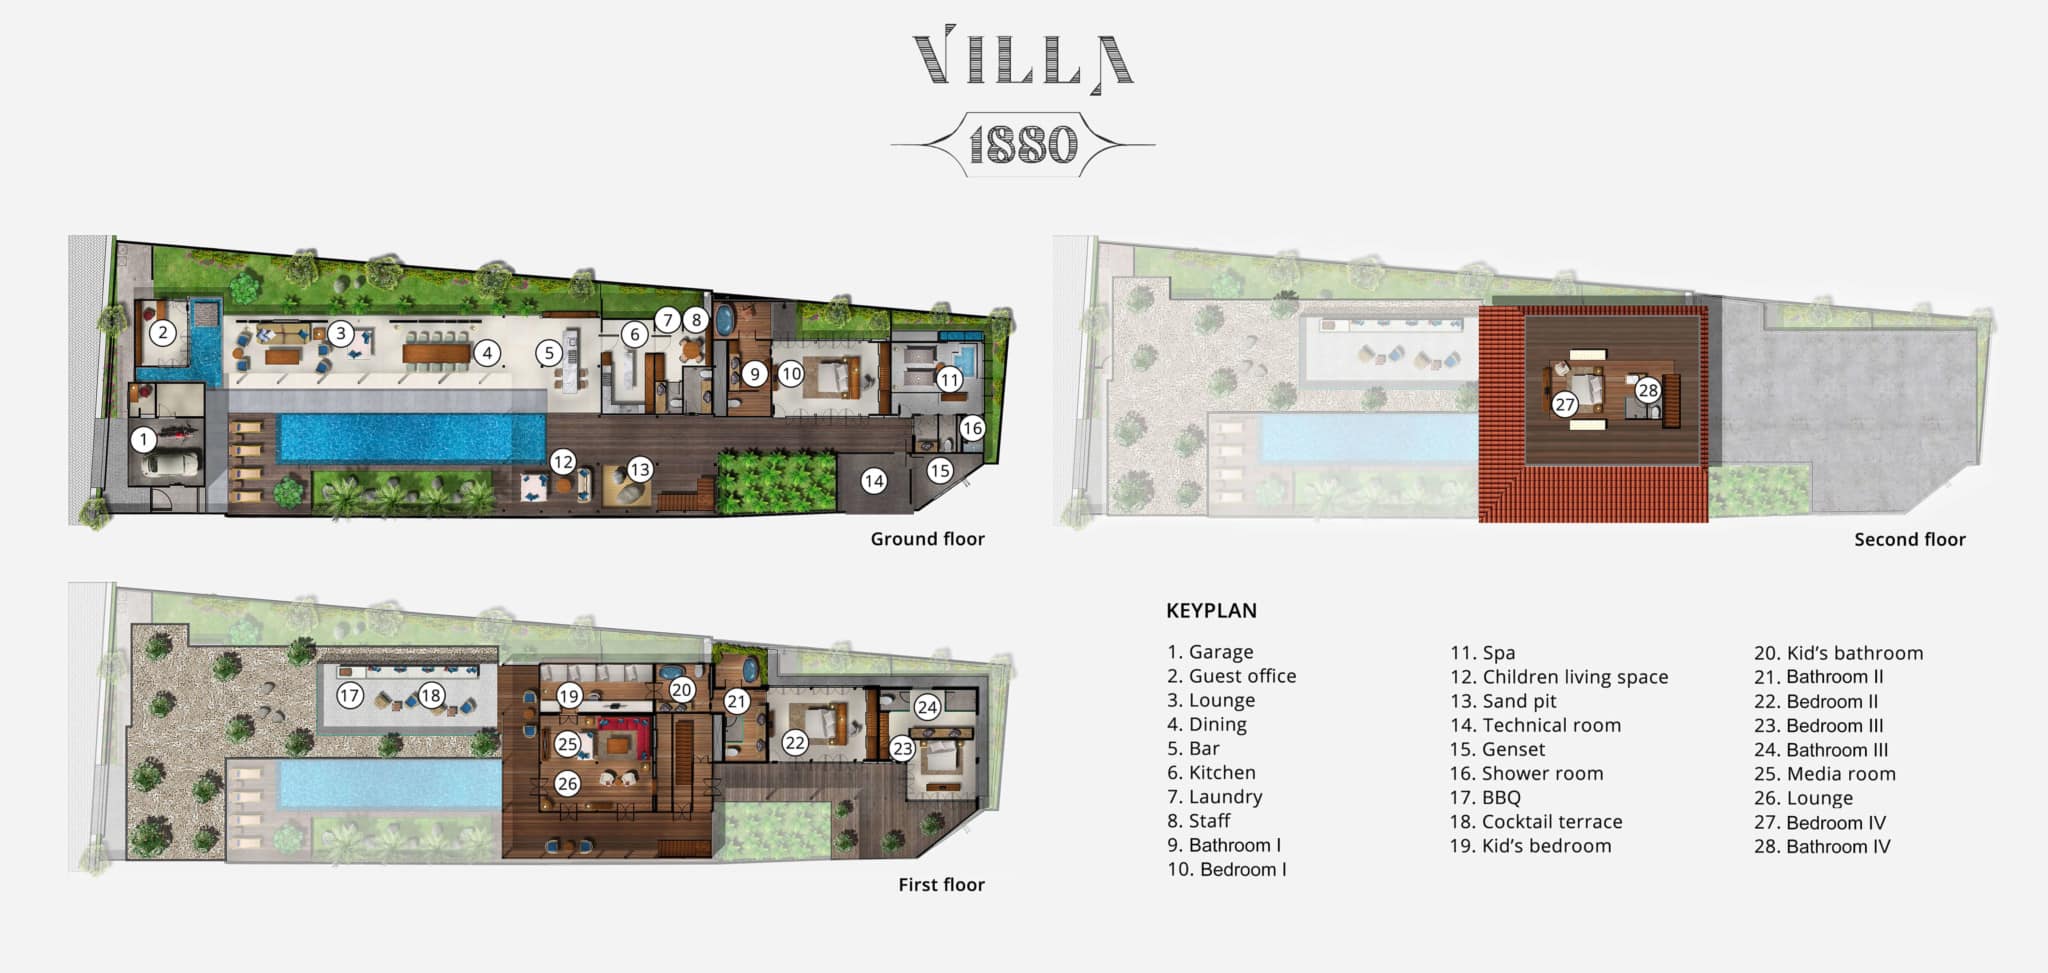 floorplan villa 1880 - seminyak julias bali